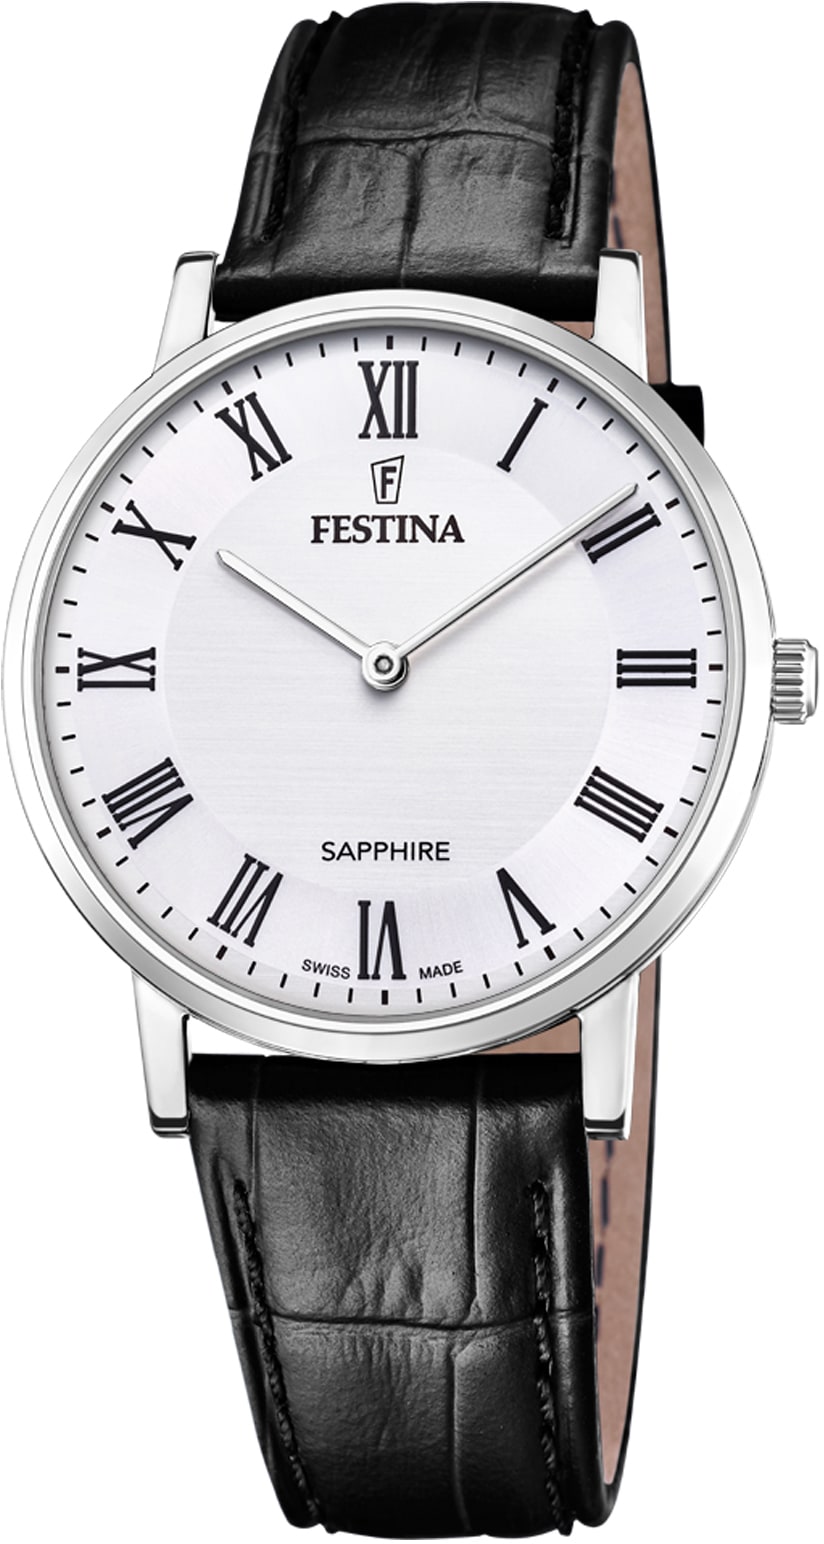 Festina Schweizer Uhr »Festina Swiss Made, F20012/2« bestellen | BAUR